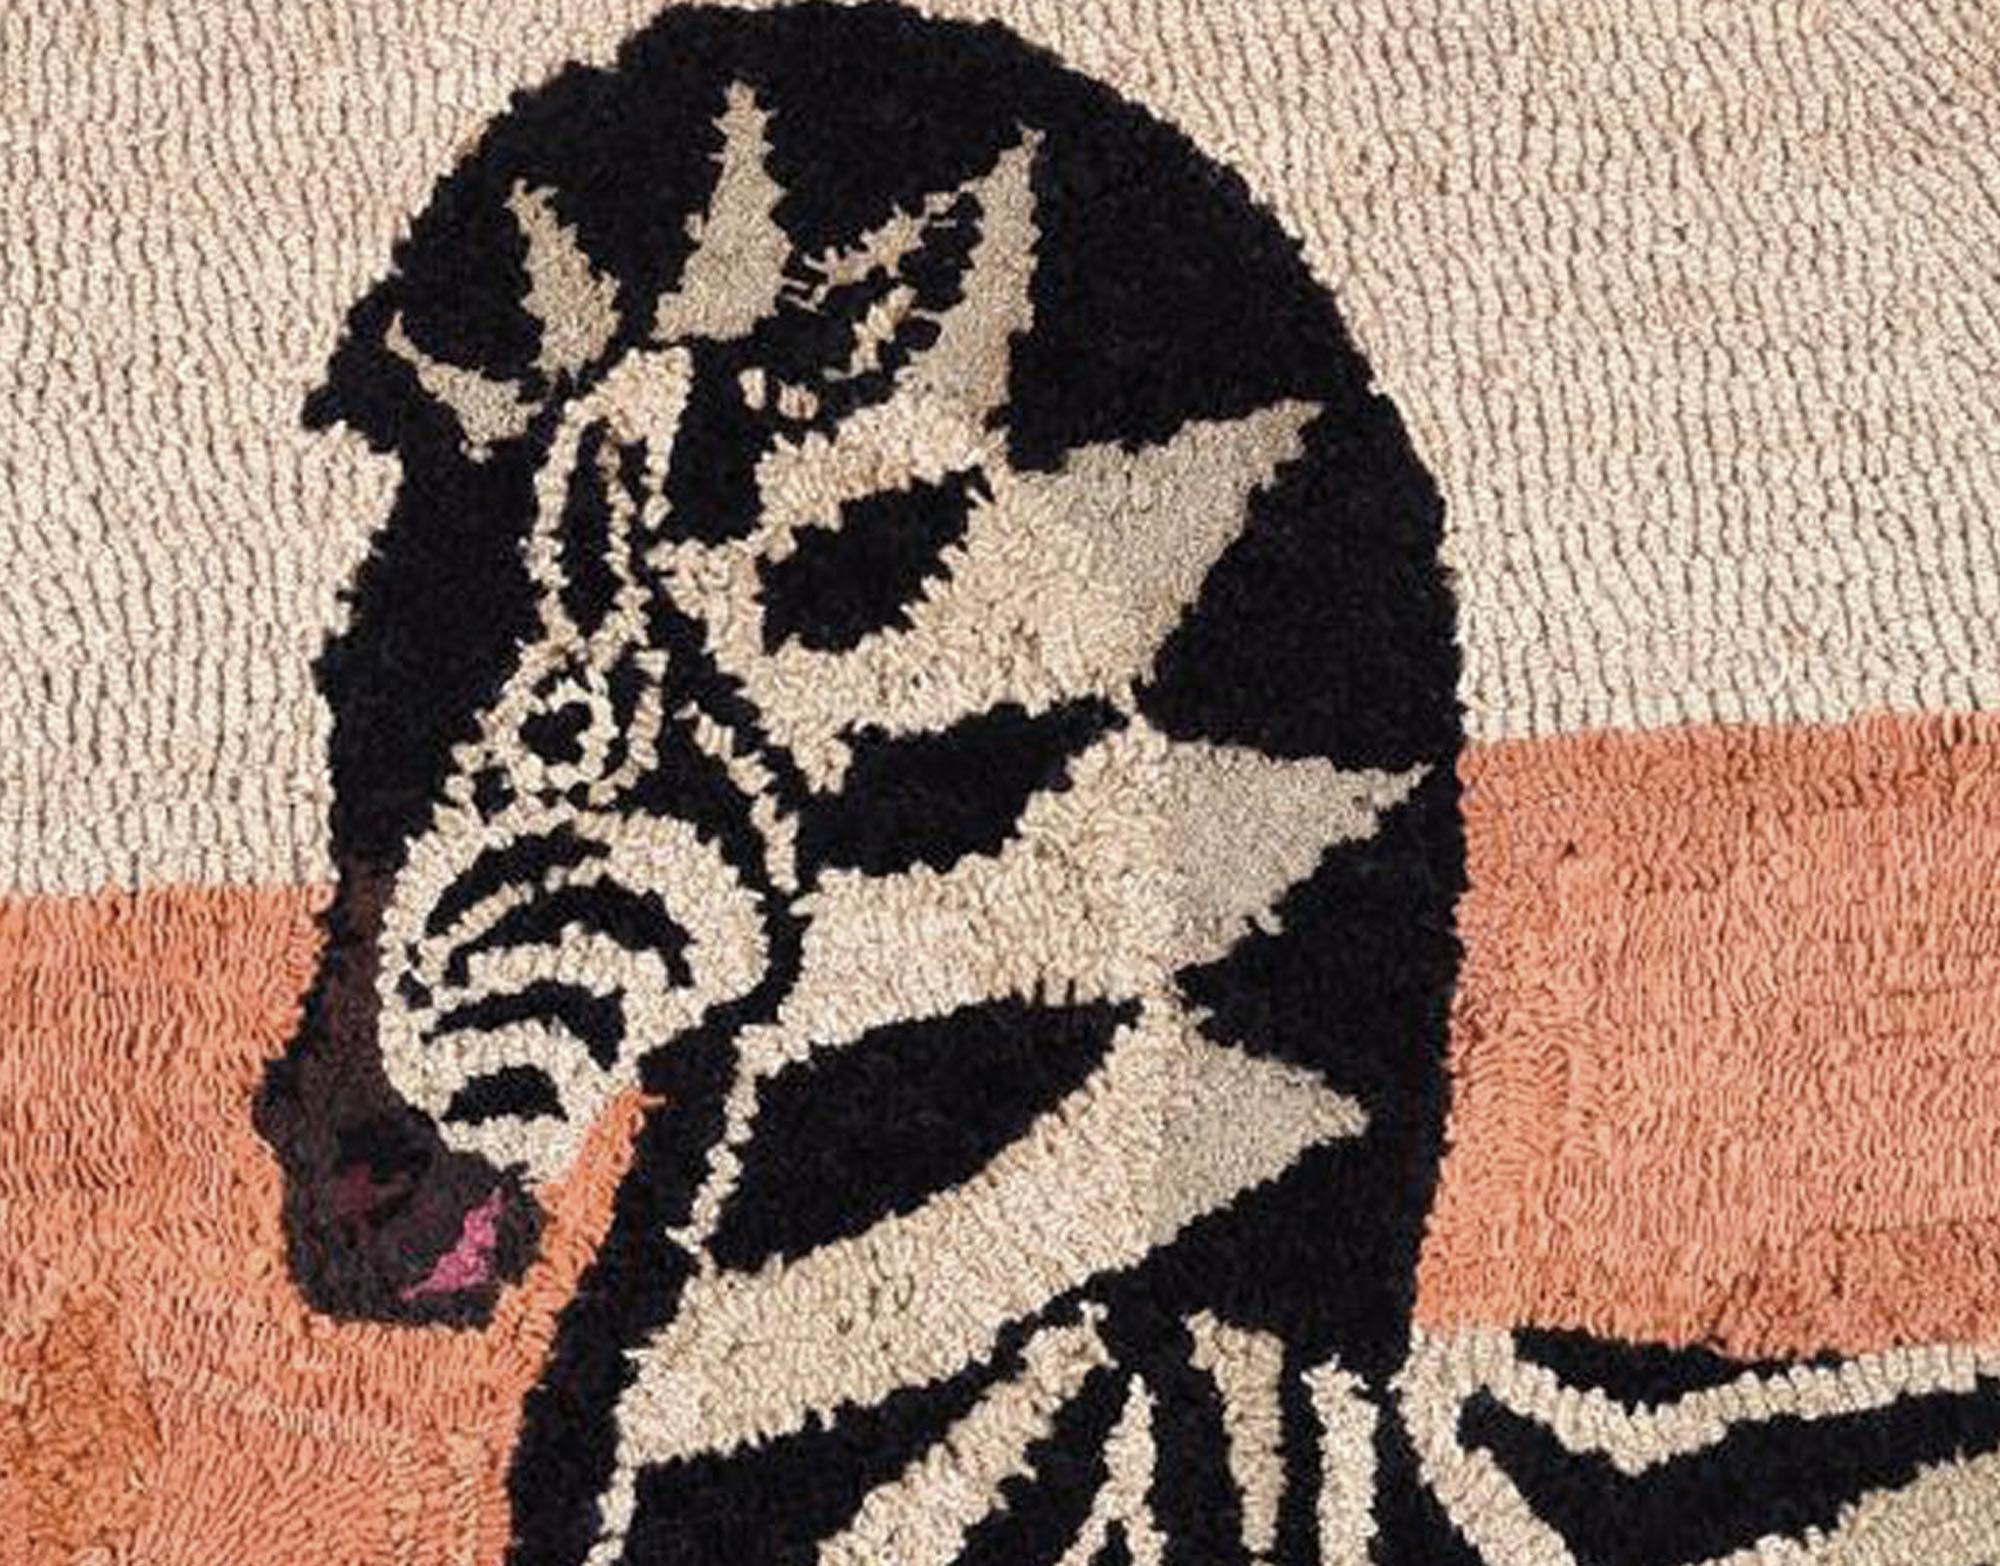 Folk Art American Hooked Rug Depicting a Zebra Early 20th Century